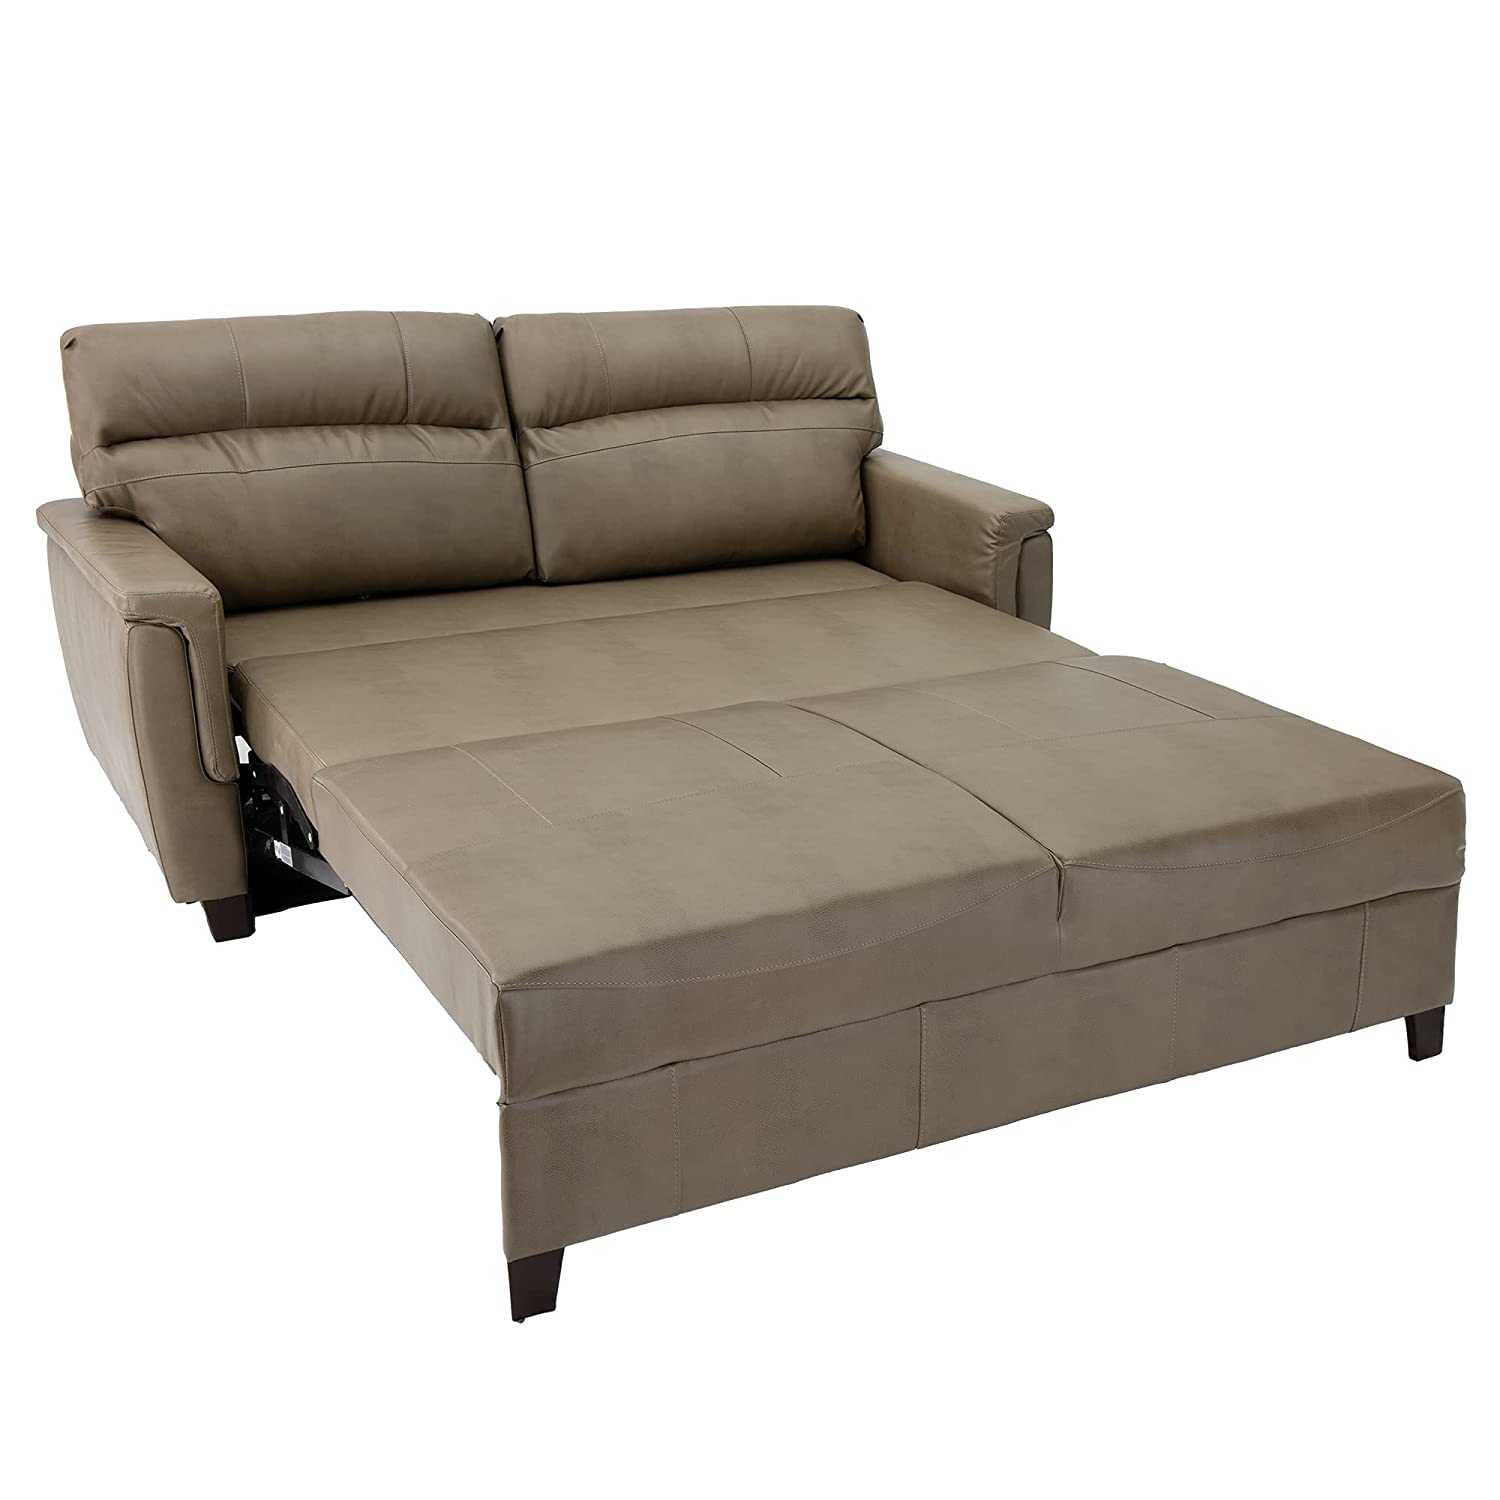 RV Tri-fold Sofa Beds